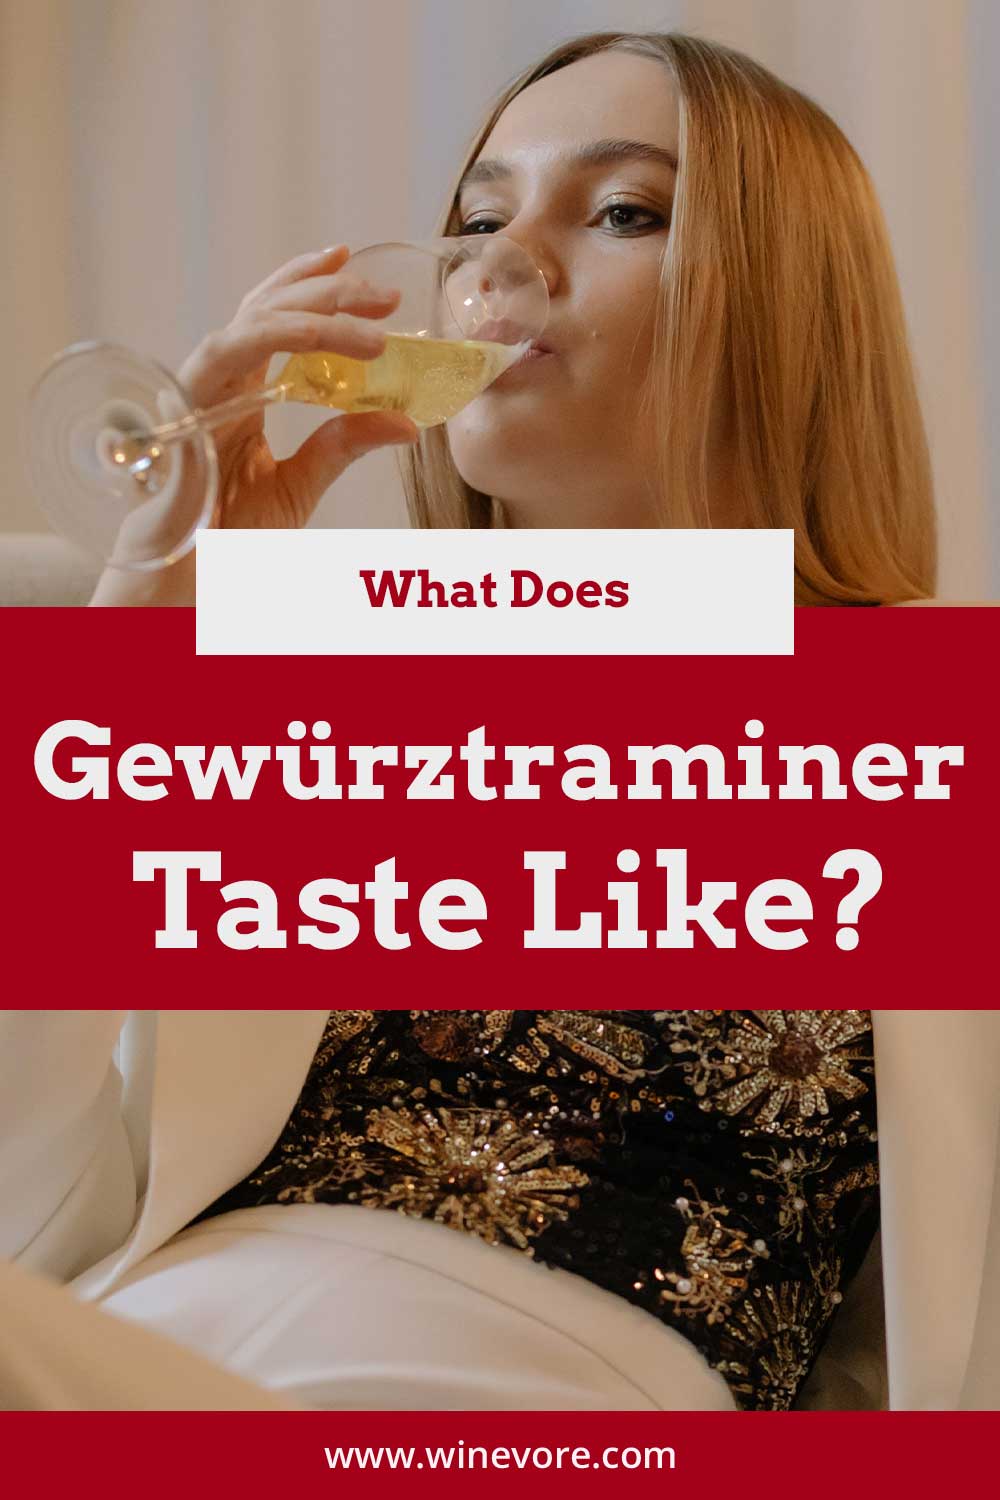 Woman in black dress drinking from a glass of wine - What Does Gewürztraminer Taste Like?